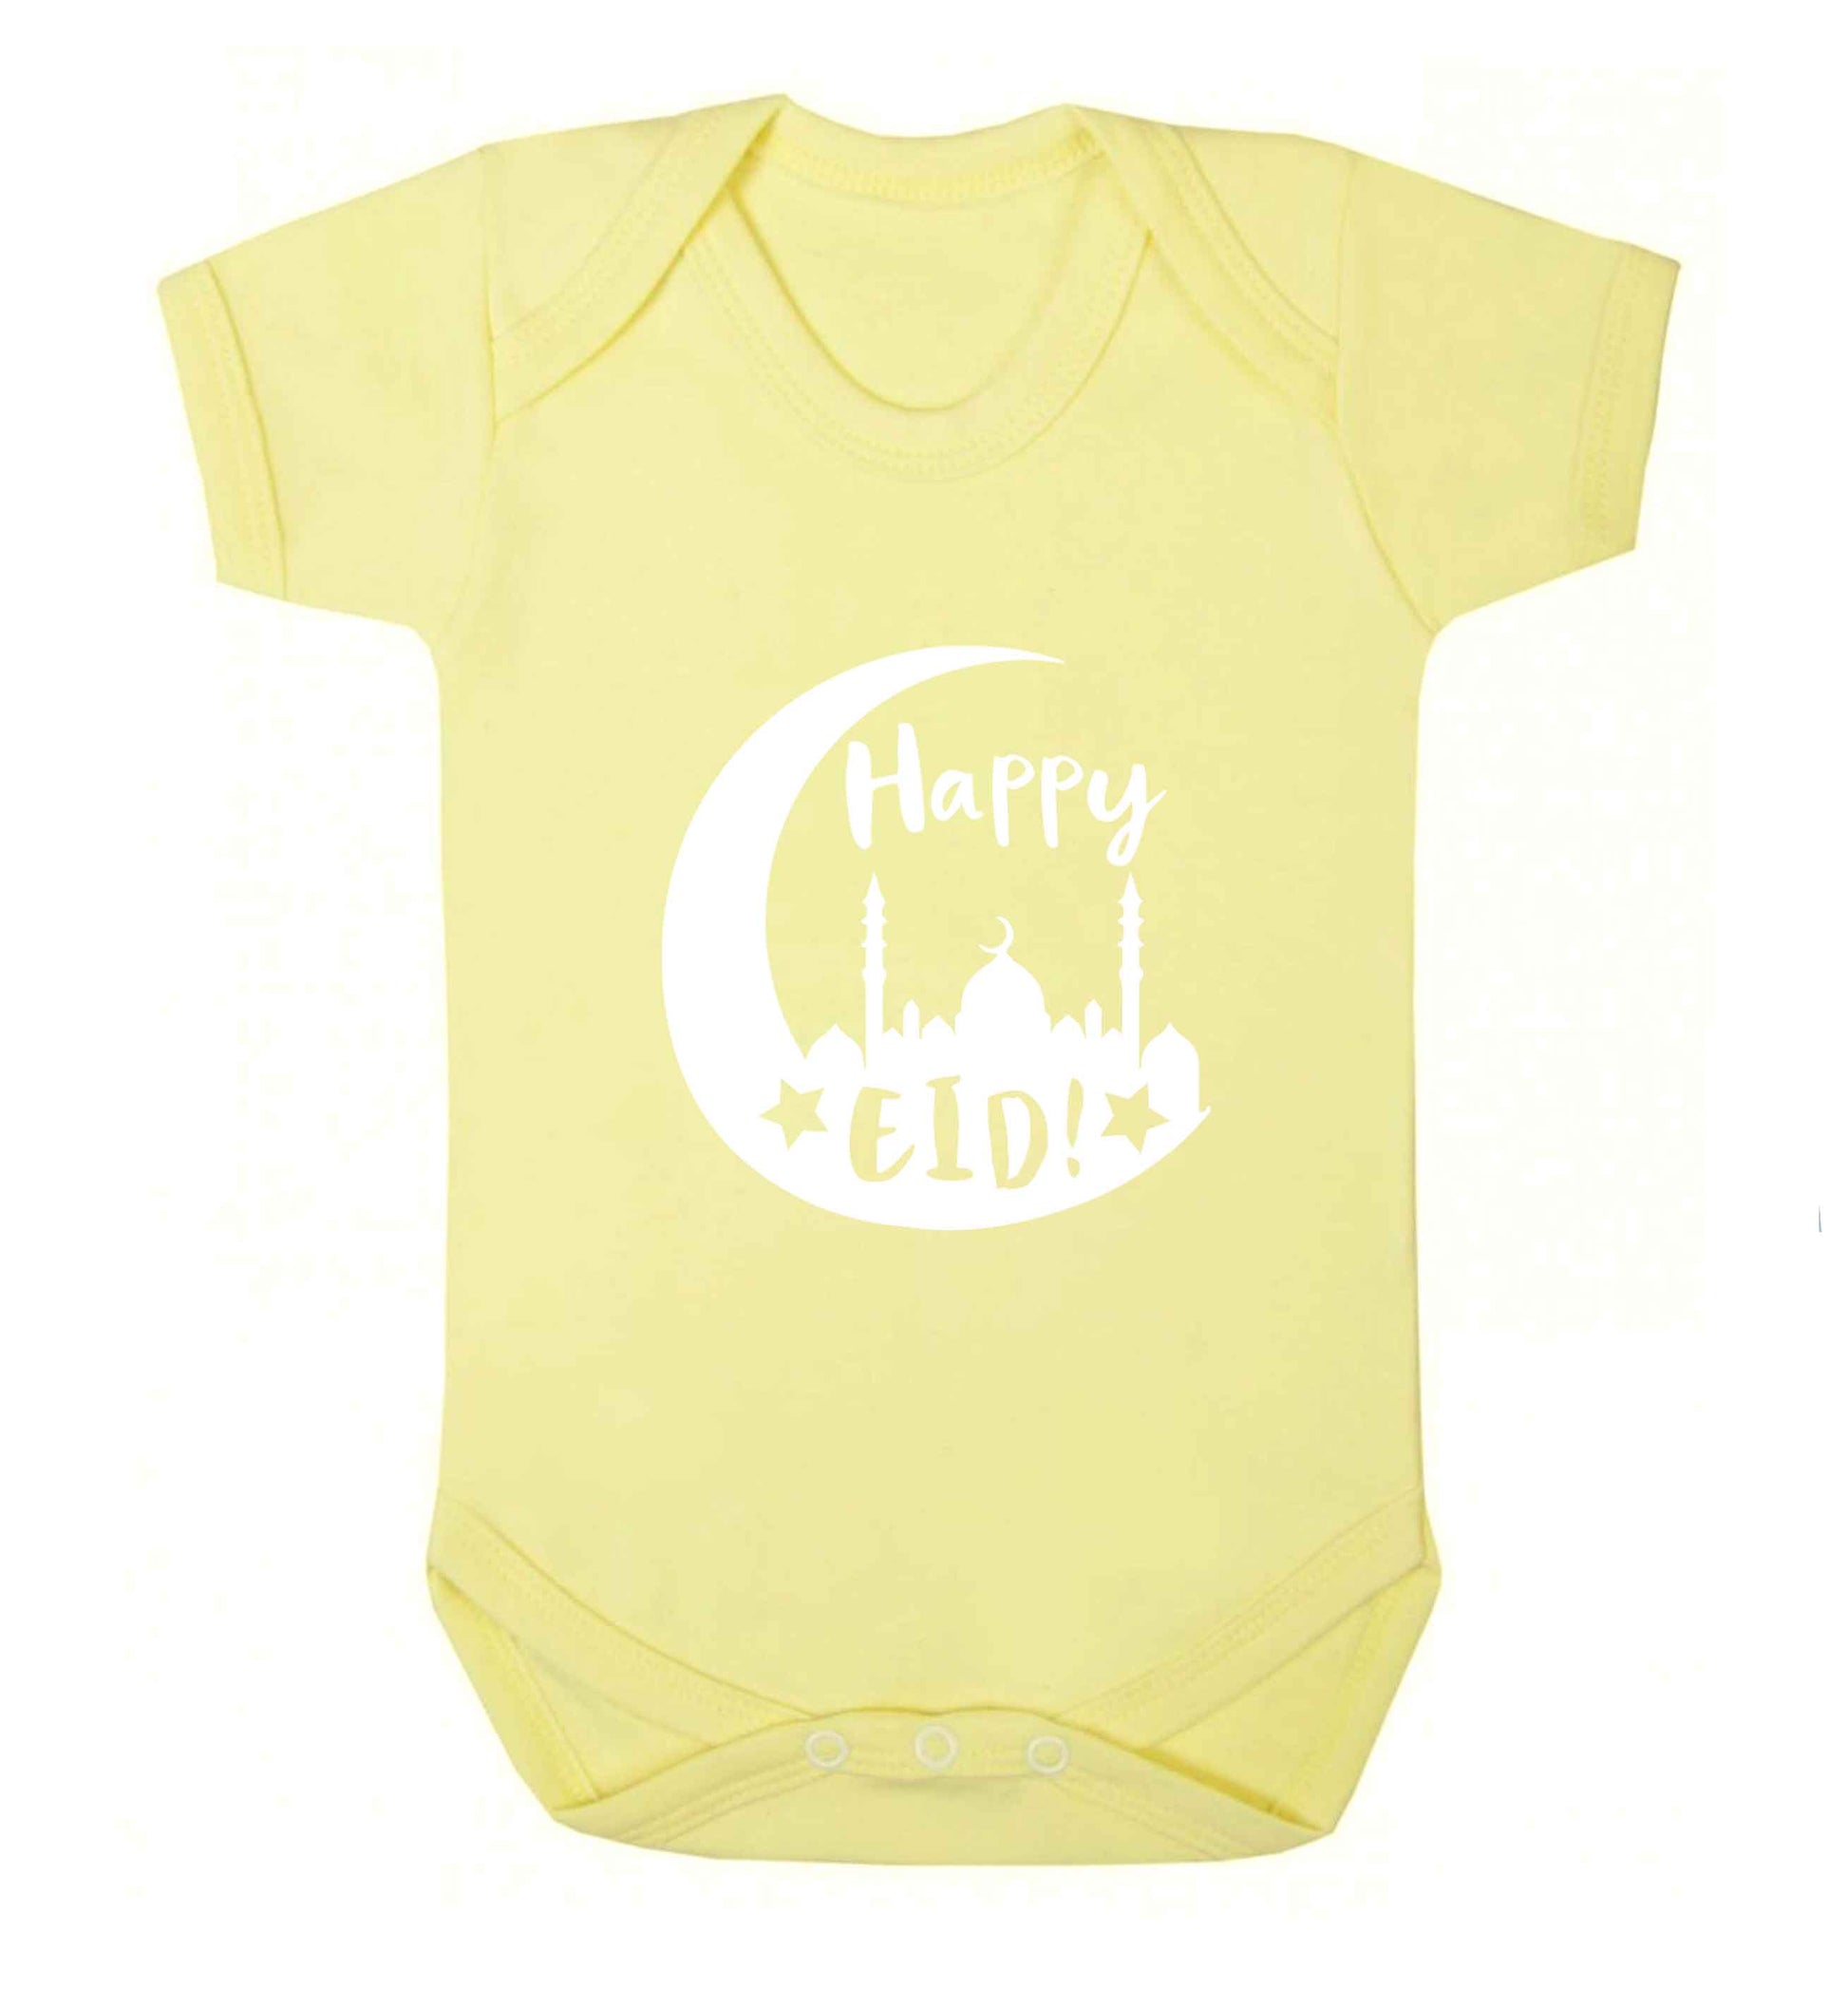 Happy Eid baby vest pale yellow 18-24 months